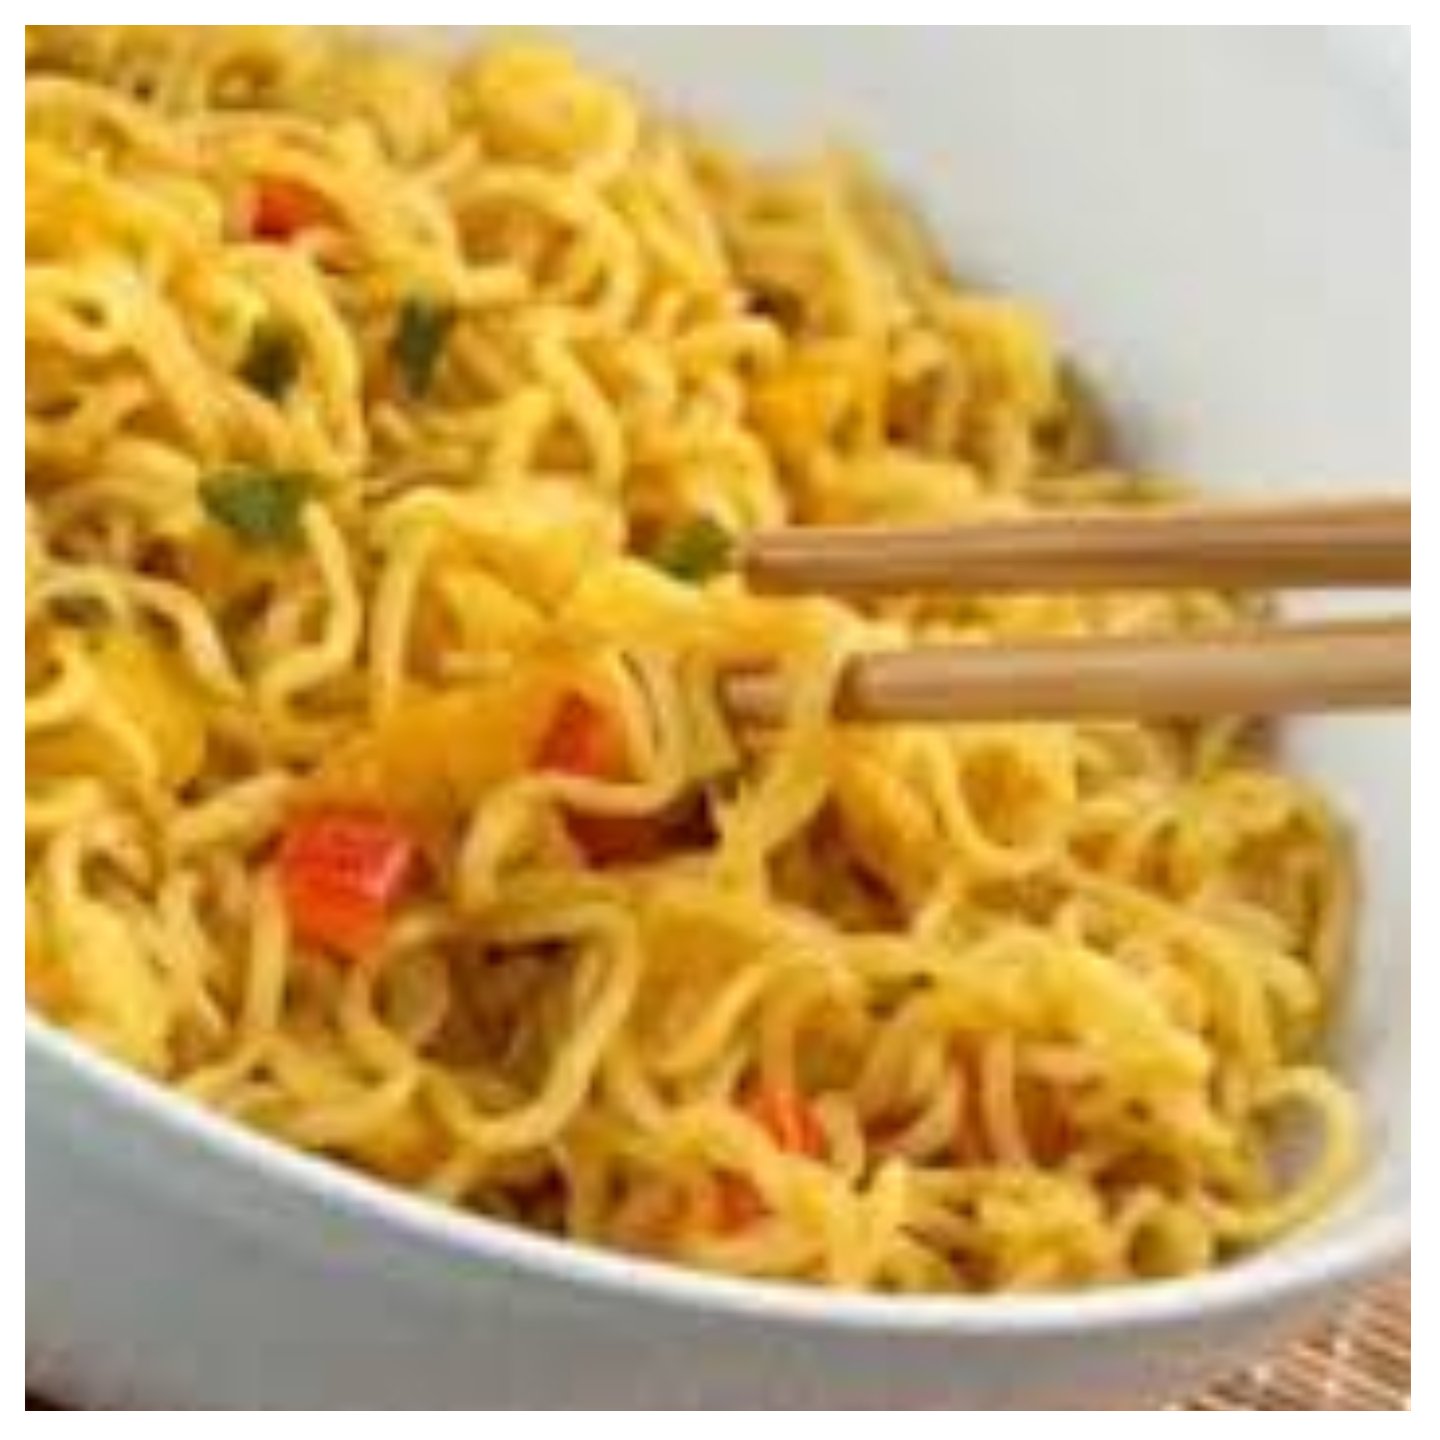 Indomie noodles safe for consumption - NAFDAC